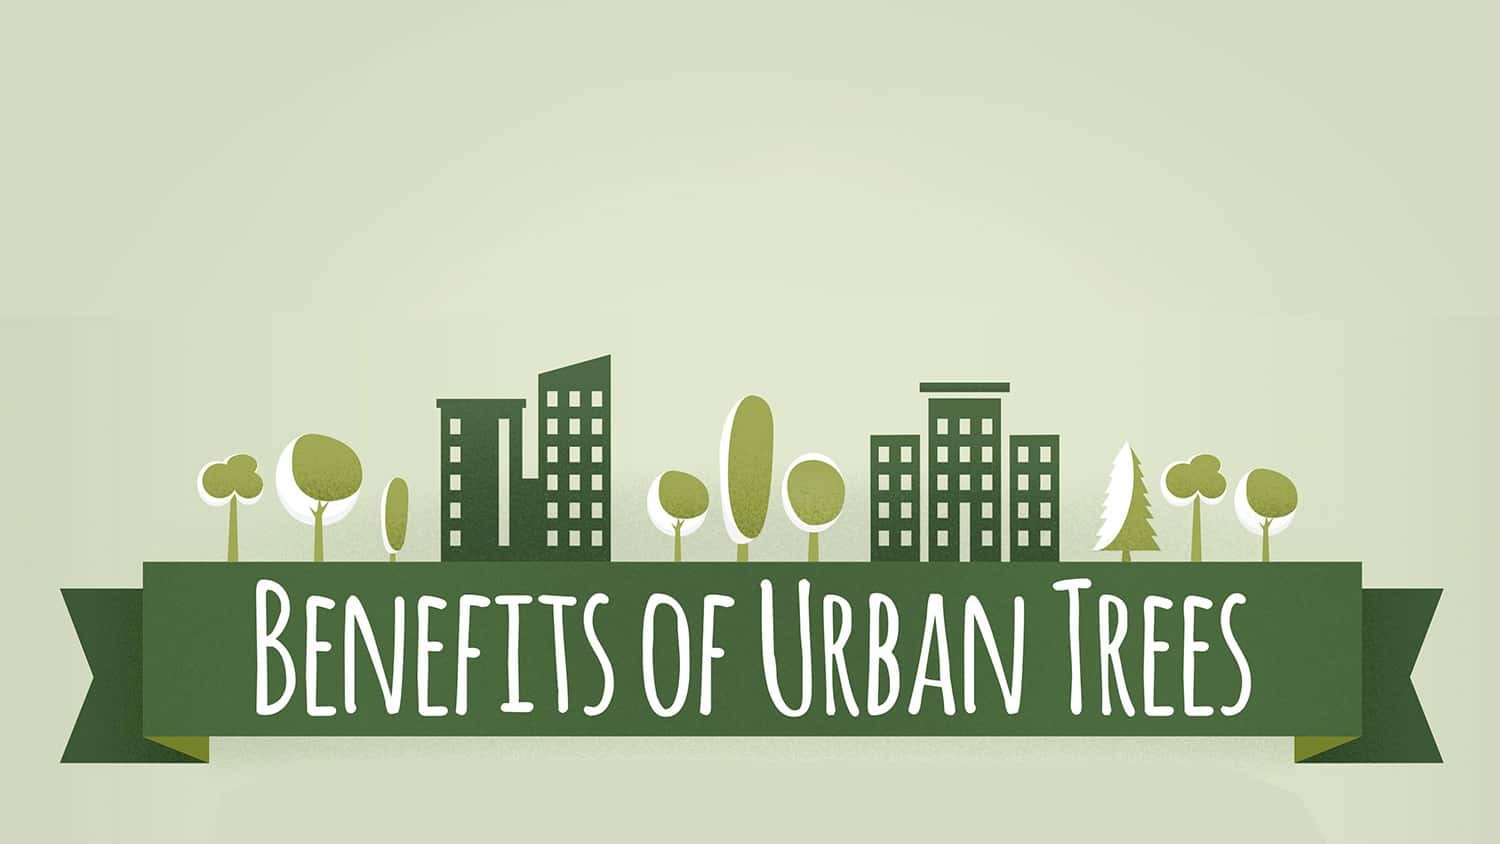 Benefits of Urban Trees